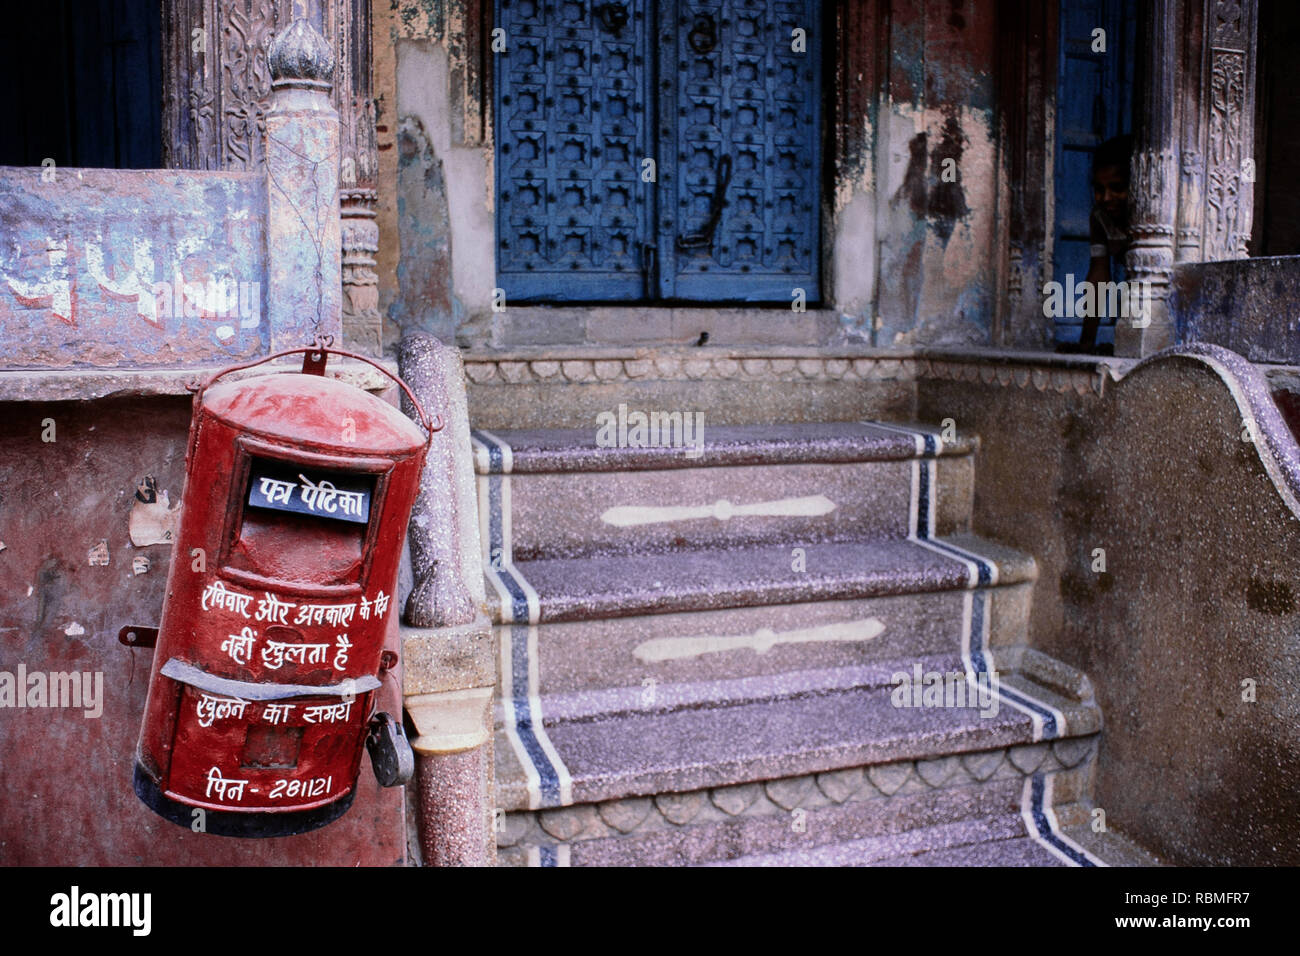 Letterbox 281121 at entrance, Vrindavan, Uttar pradesh, India, Asia Stock Photo